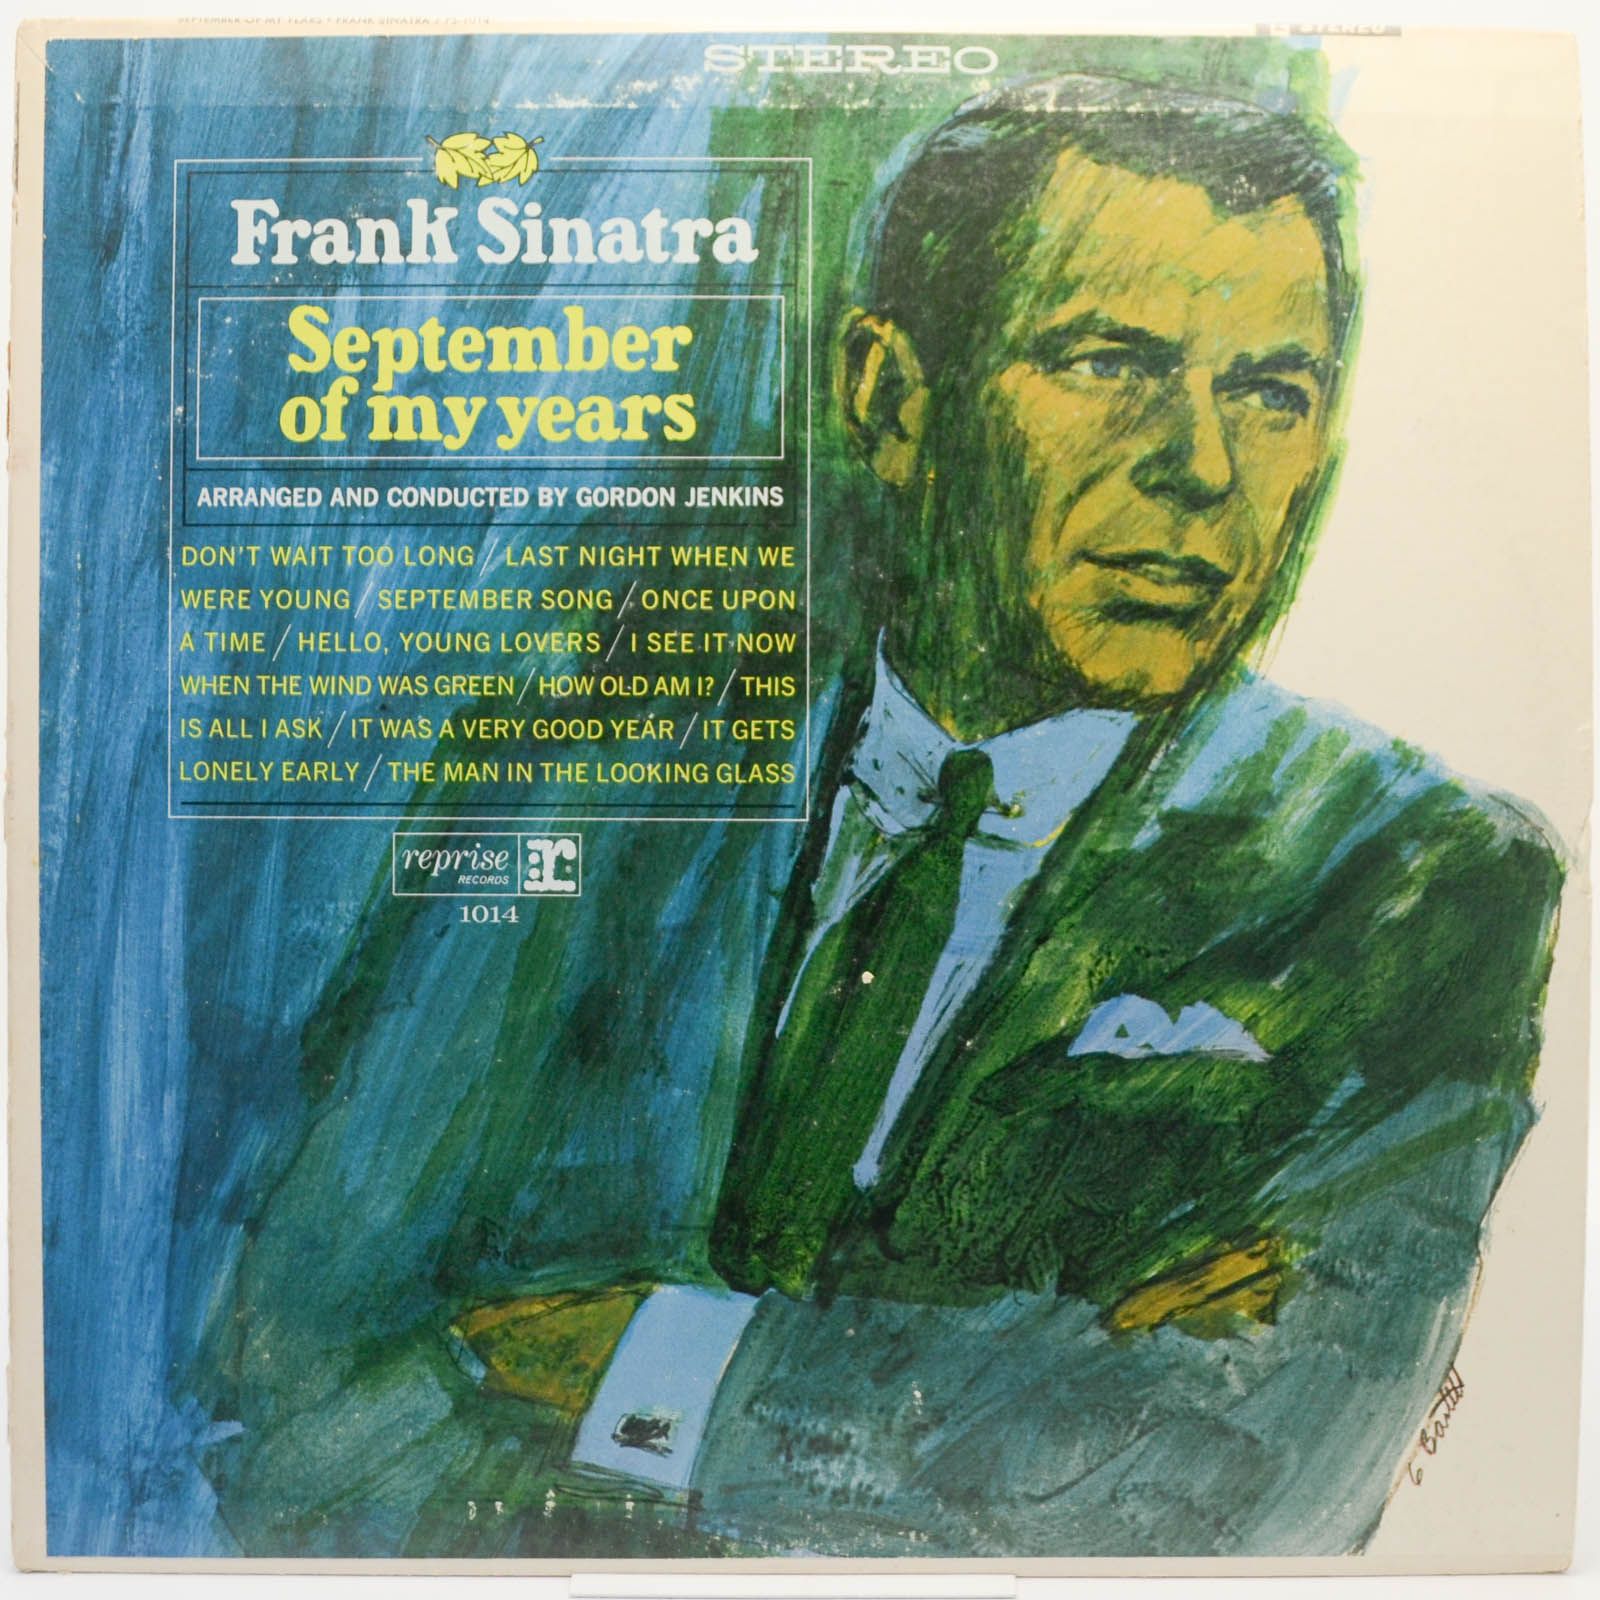 Frank Sinatra — September Of My Years (USA), 1965